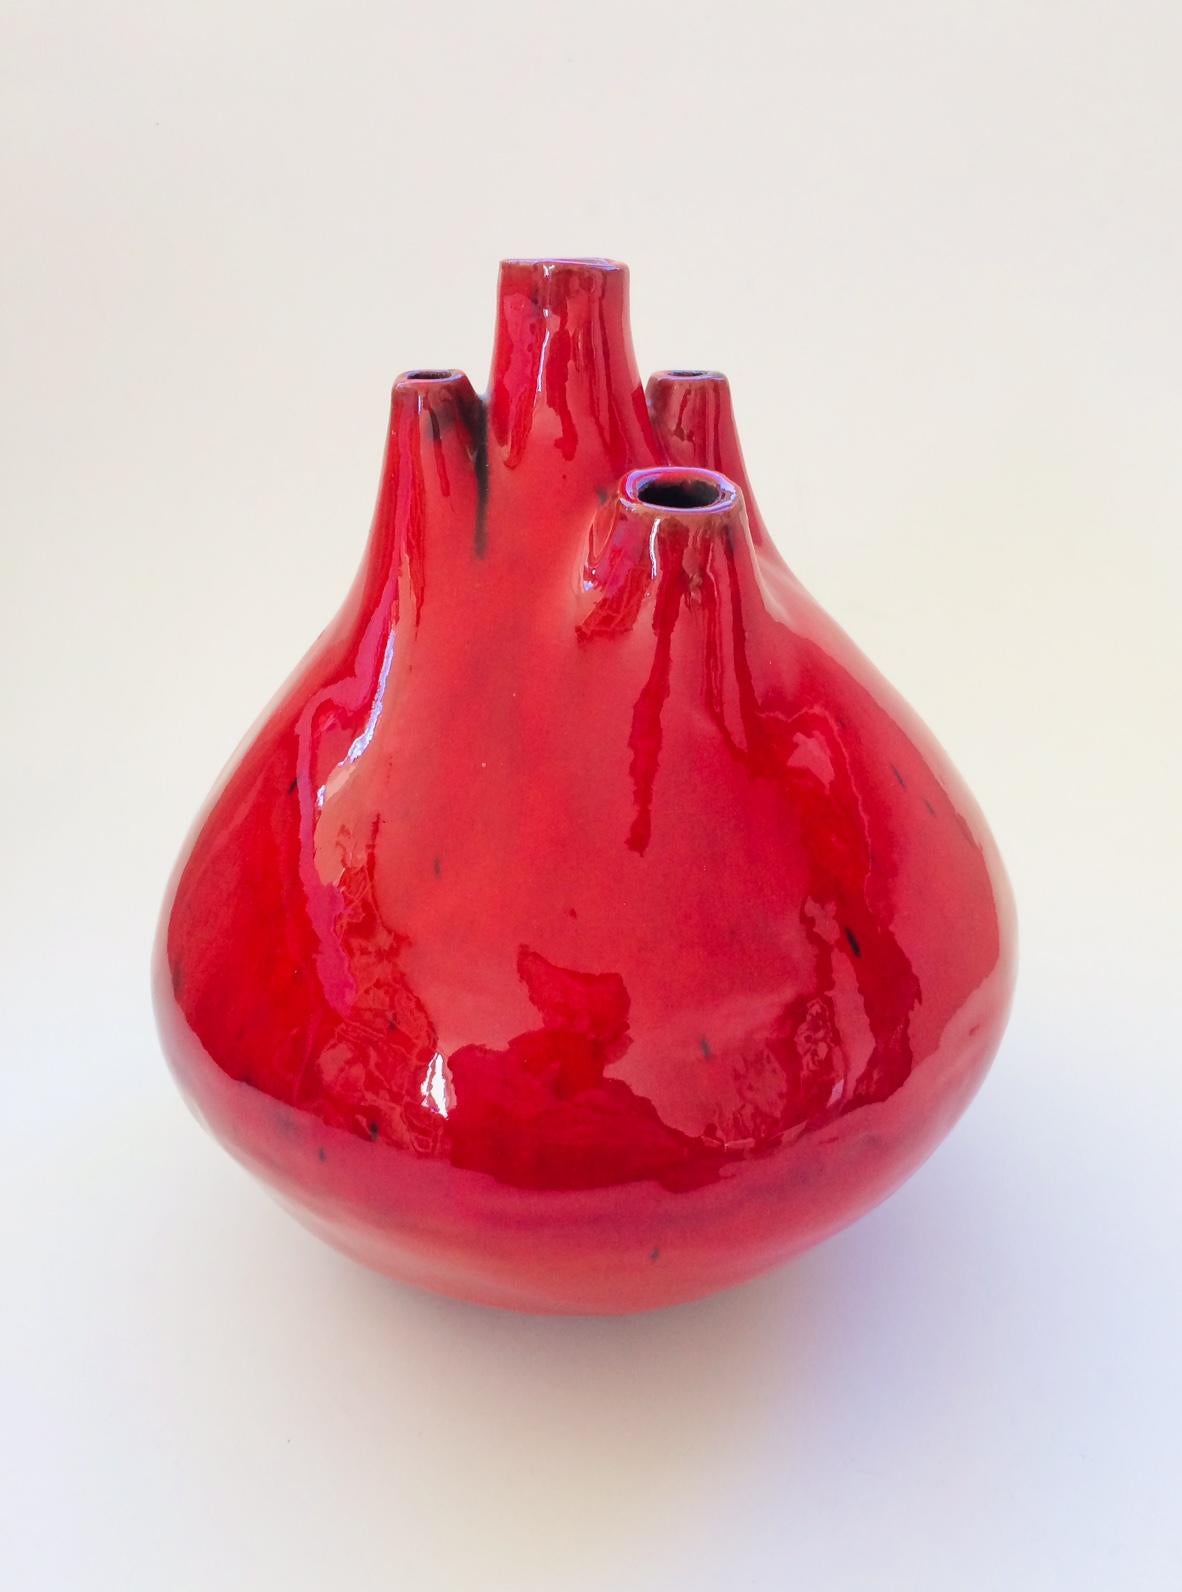 Vintage Midcentury Modern Belgian Art Pottery Spout Vase von Hugria Ceramics, Laarne Studios, Belgien 1960er Jahre. Im Stil der berühmten Perignem Amphora Studio Töpfervasen. Große & seltene Modellvase. Selen rot glasiert. Gestempelt mit Hugria -3 -